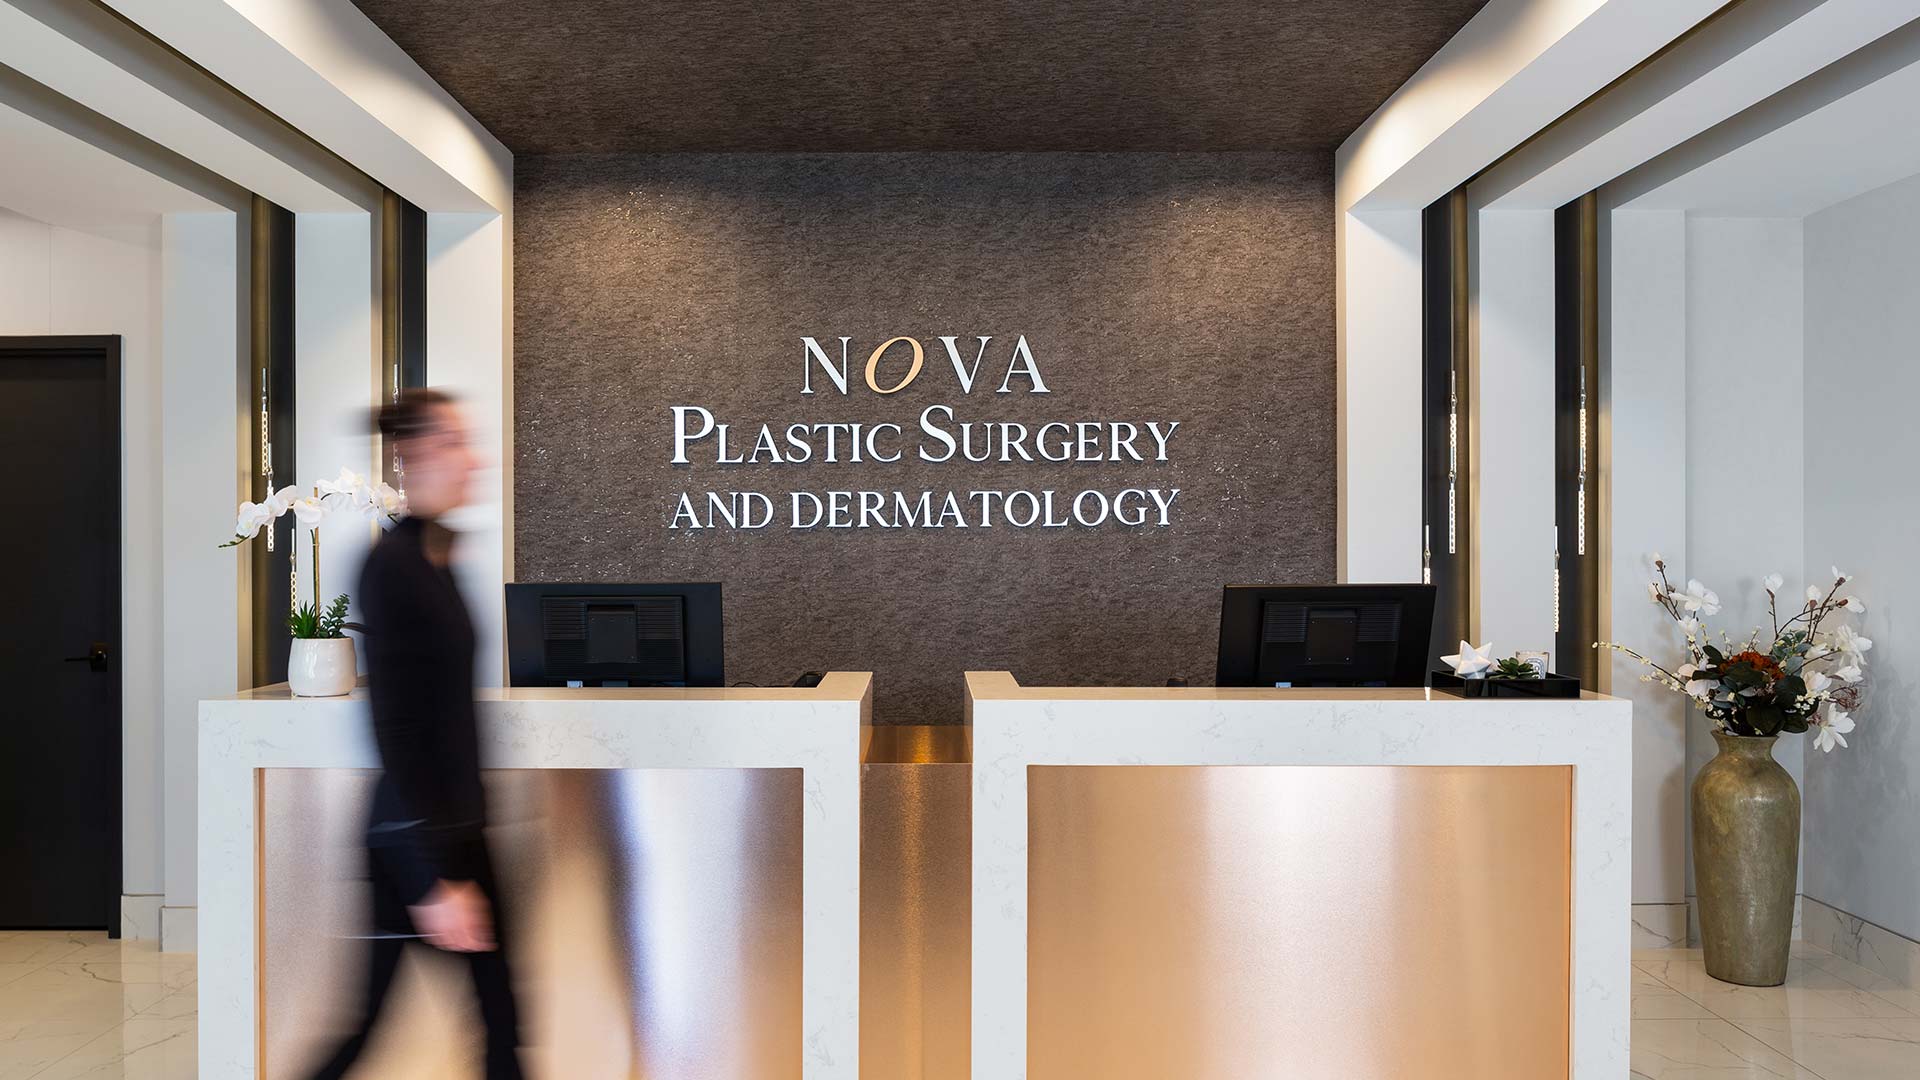 NOVA Plastic Surgery and Dermatology